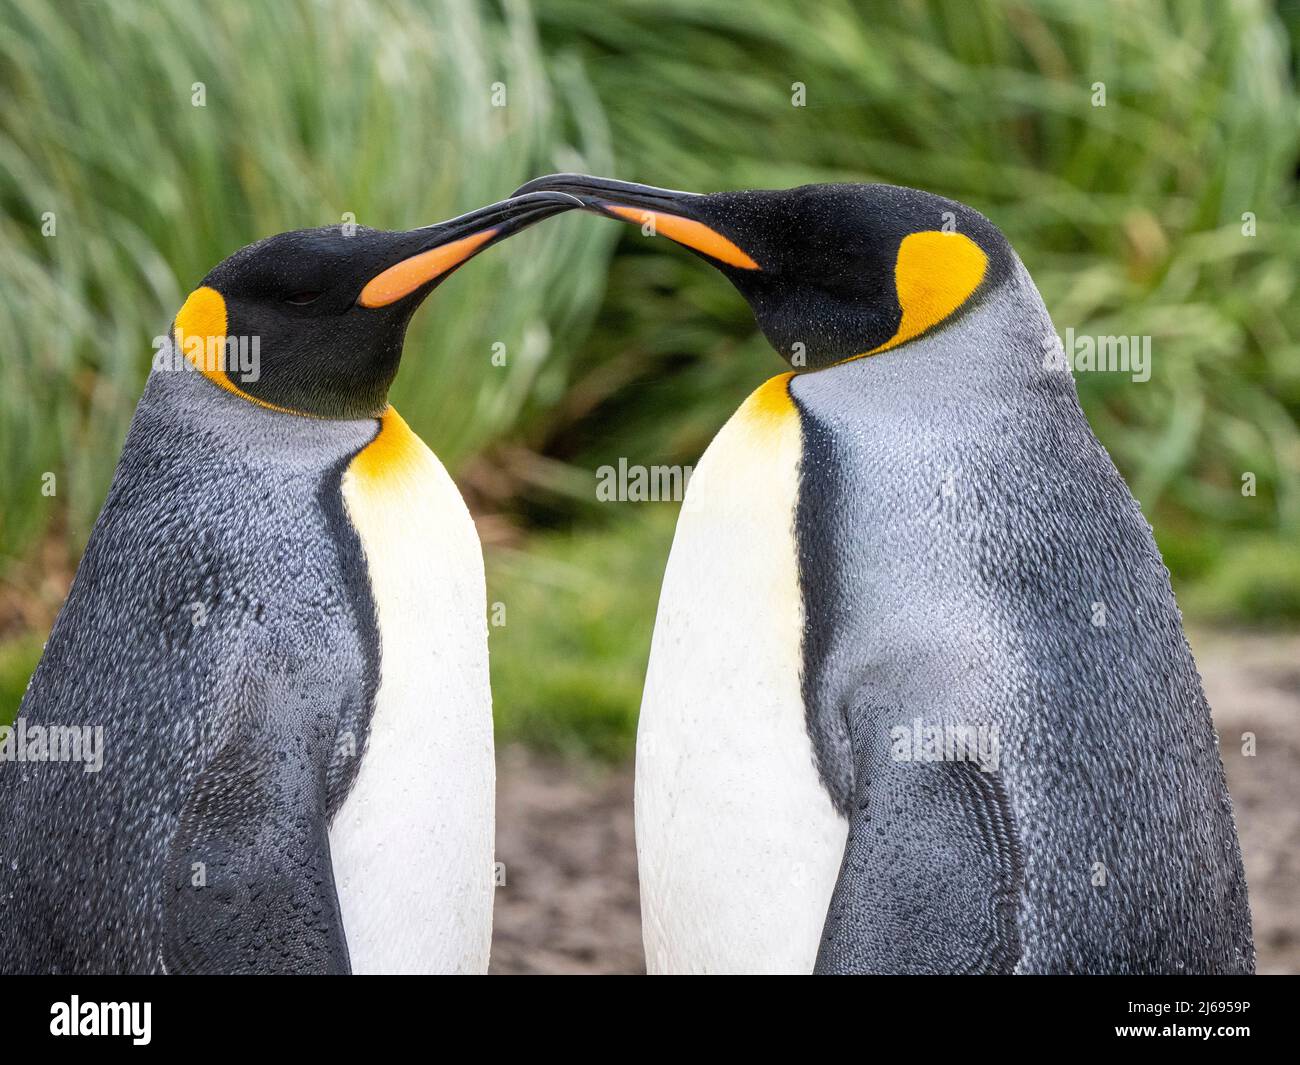 King penguins (Aptenodytes patagonicus) preening themselves at Salisbury Plain, South Georgia, South Atlantic, Polar Regions Stock Photo